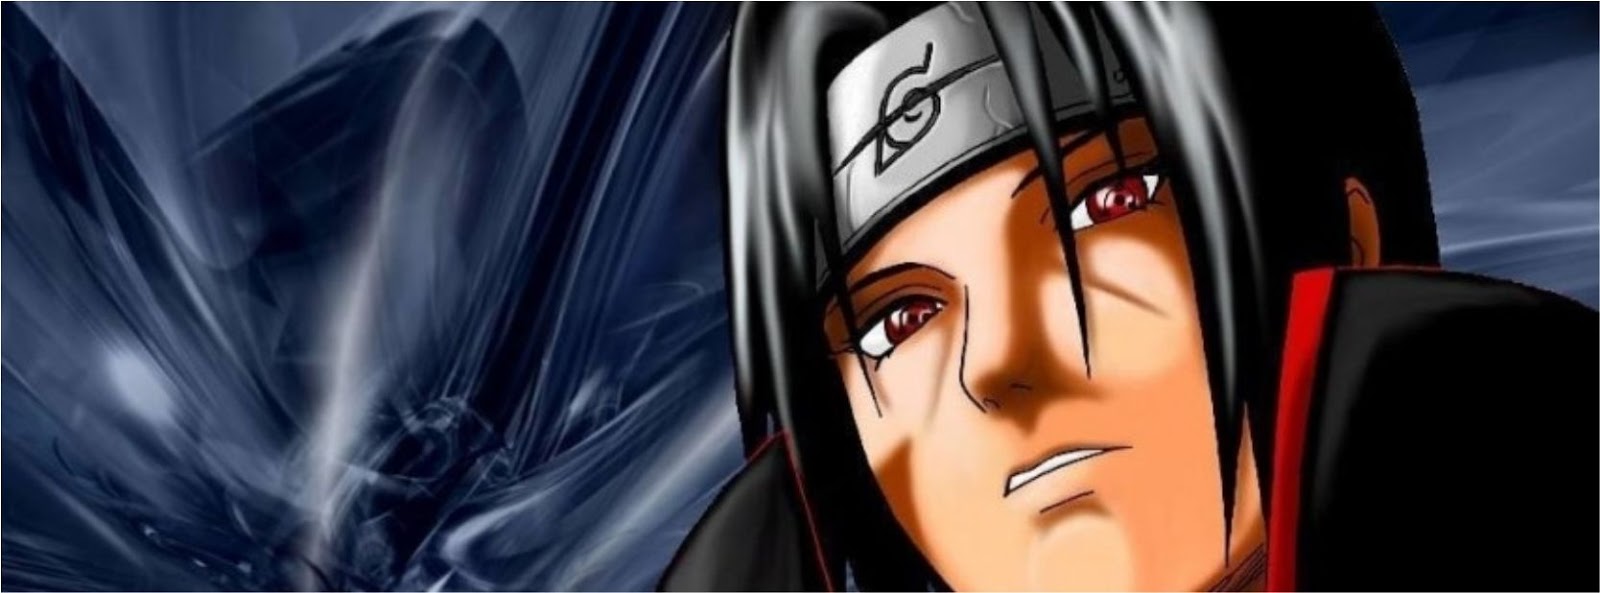 Gambar 100 Gambar Dp Bbm Animasi Naruto Bergerak Terbaru 